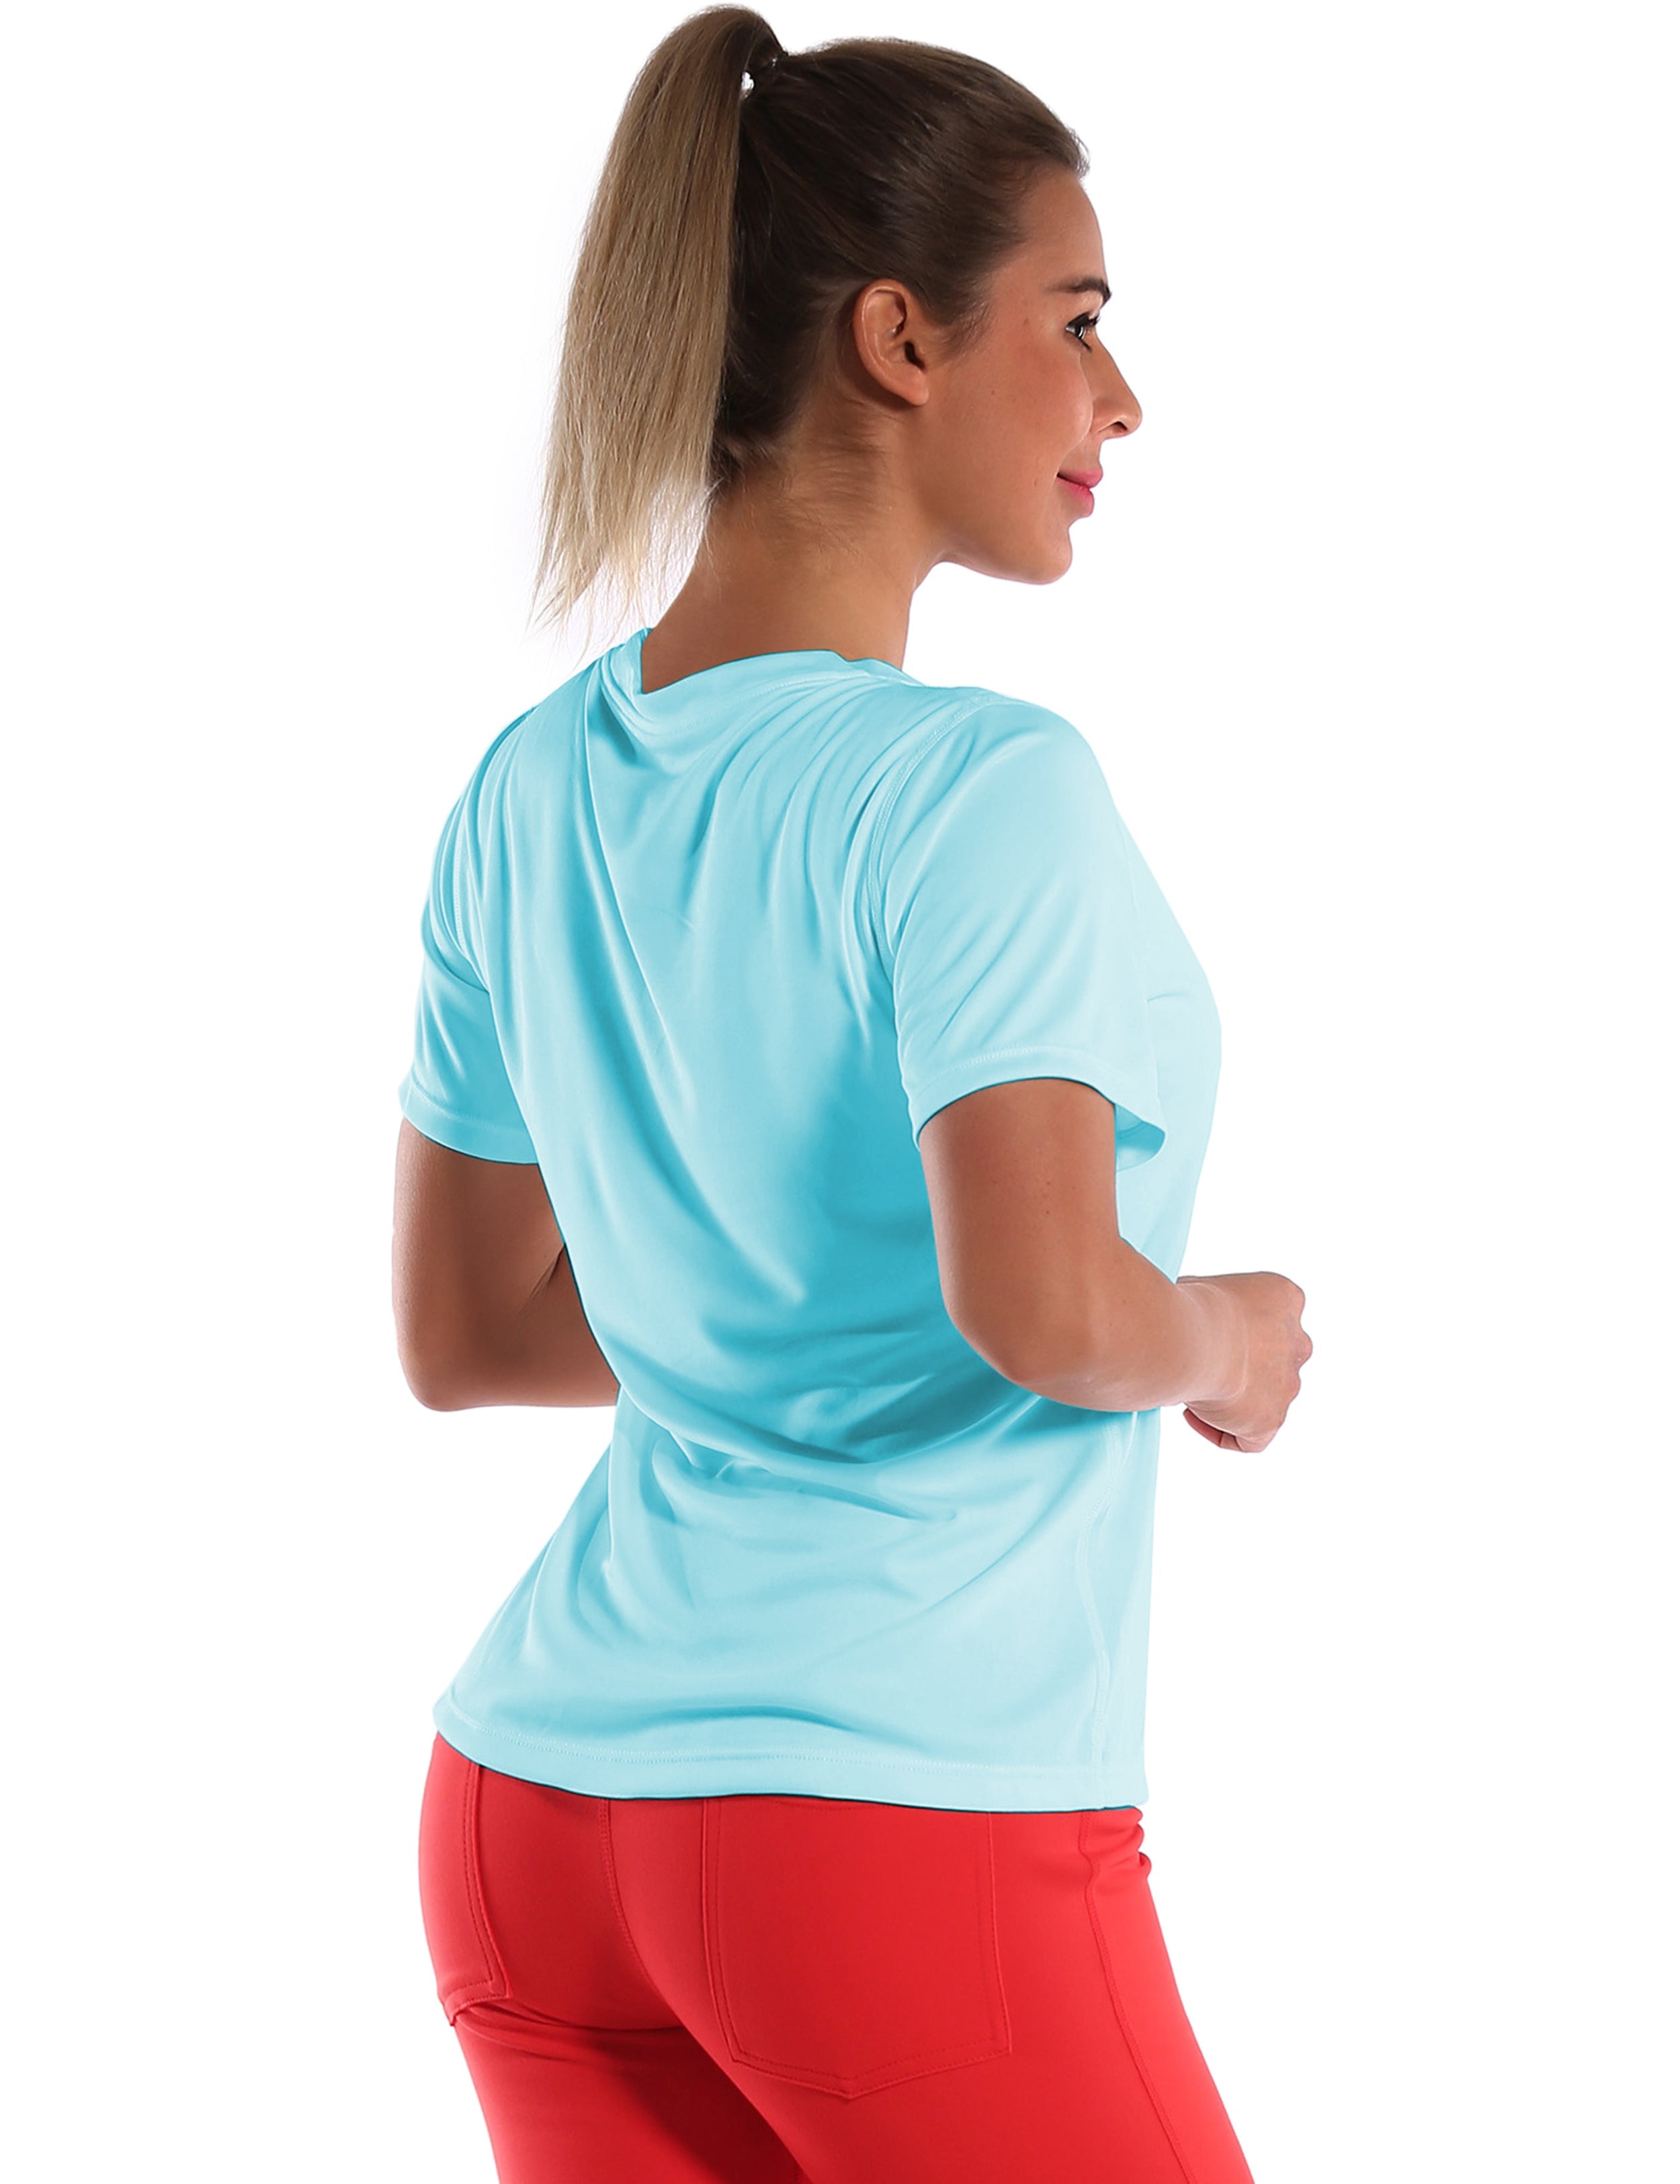 V-Neck Short Sleeve Athletic Shirts blue_Golf